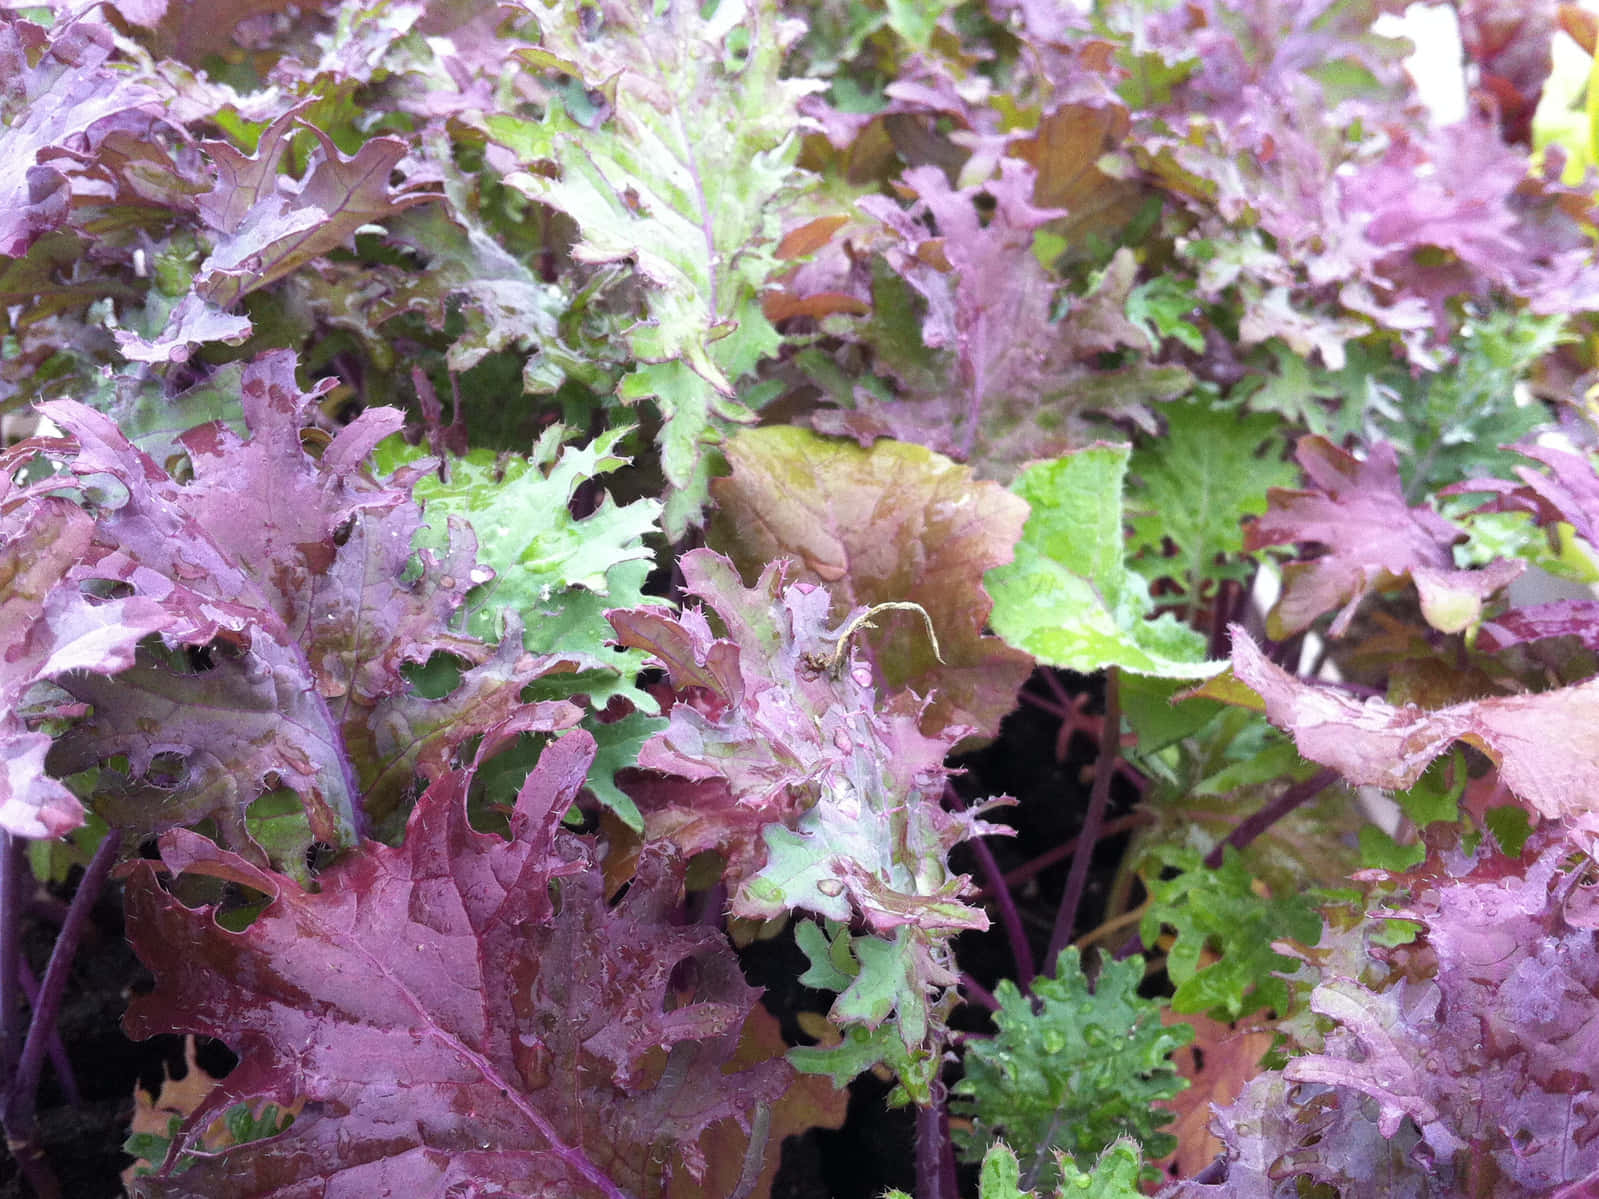 Enjoying These Super Nutritious Purple Kale Leaves Wallpaper